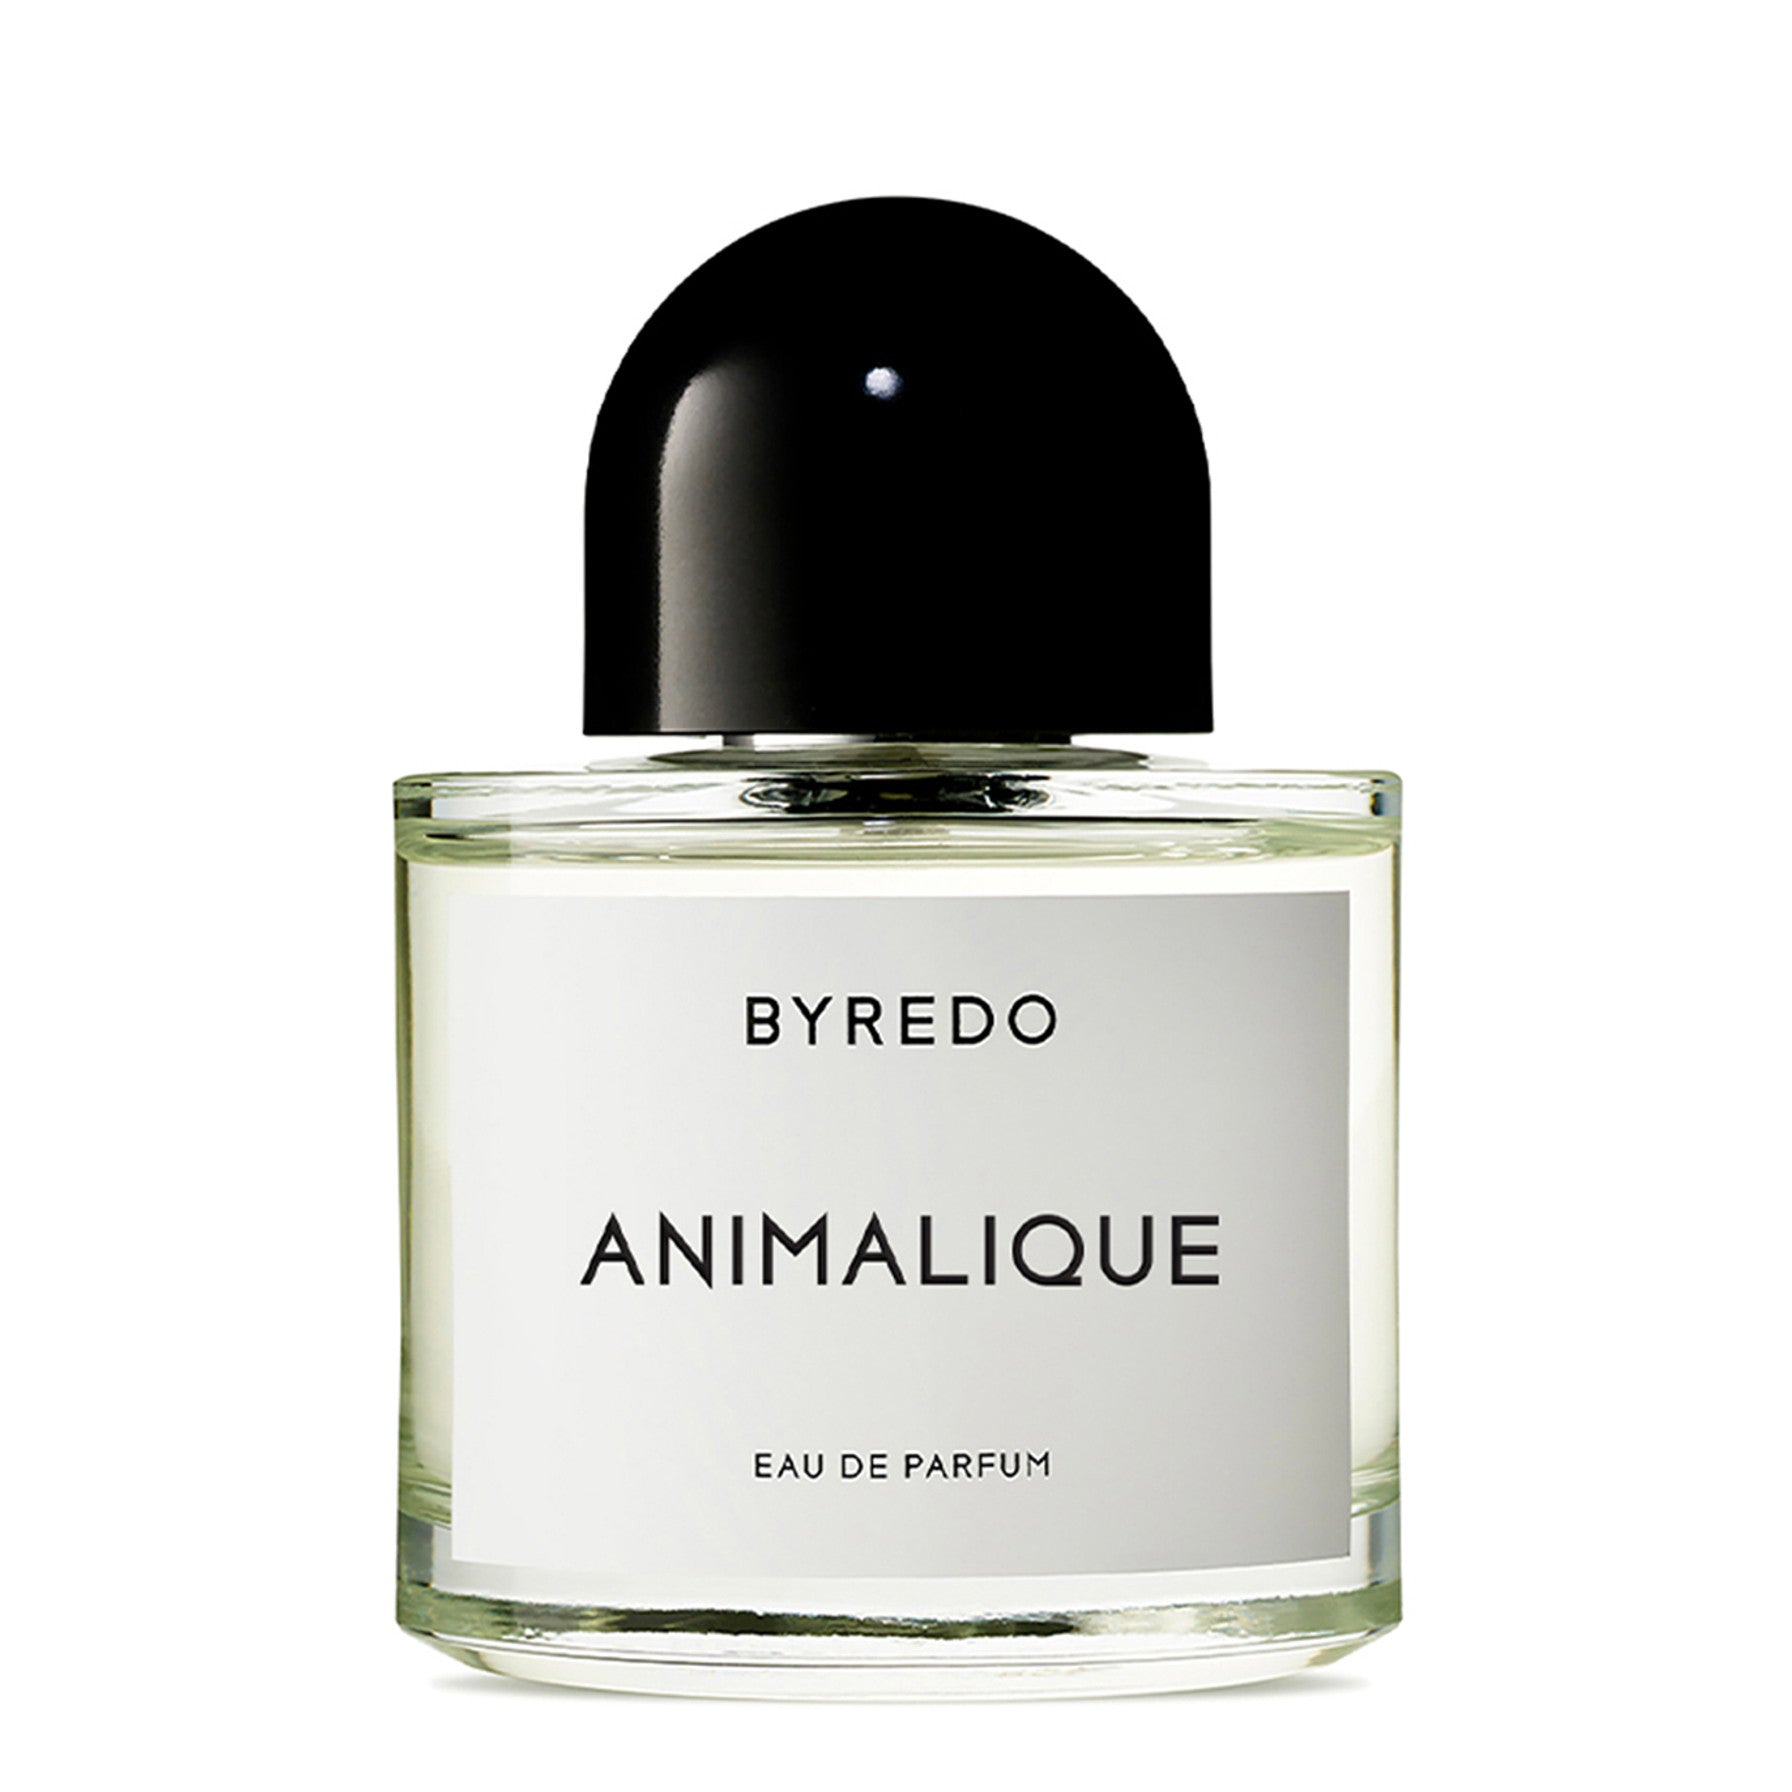 Byredo - “Animalique” Eau de Parfum 100ml view 1